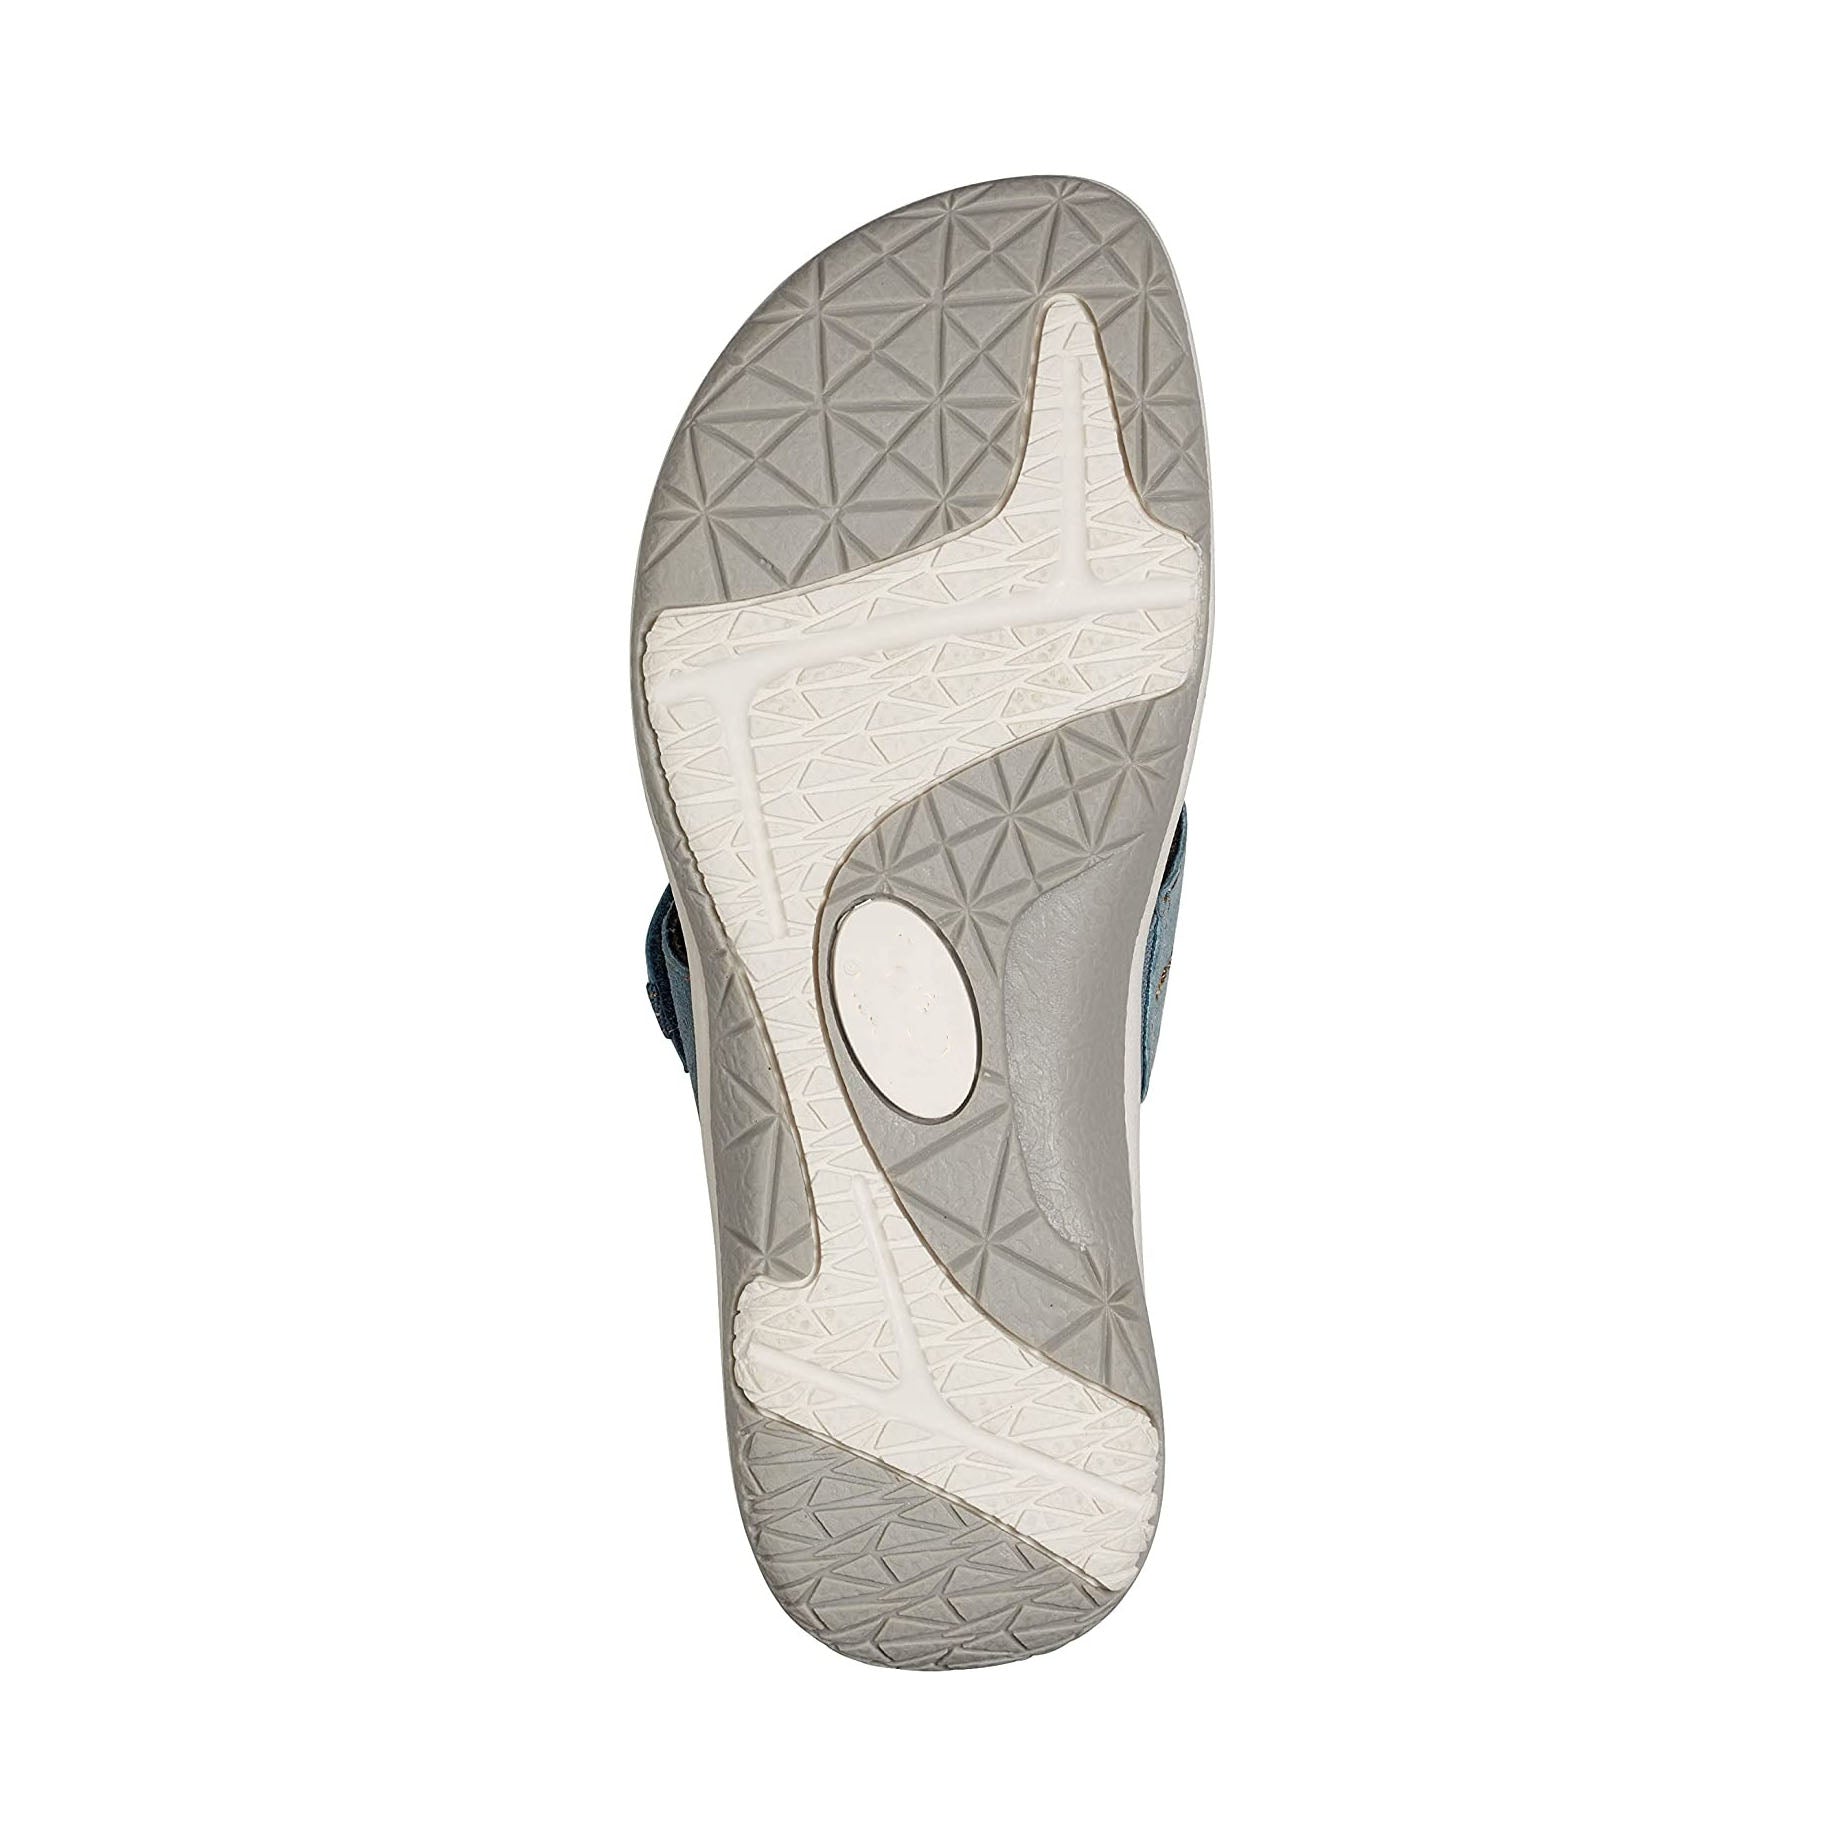 Orthopedic Sandals Women Beach Summer Adjustable Strap Soft Soles